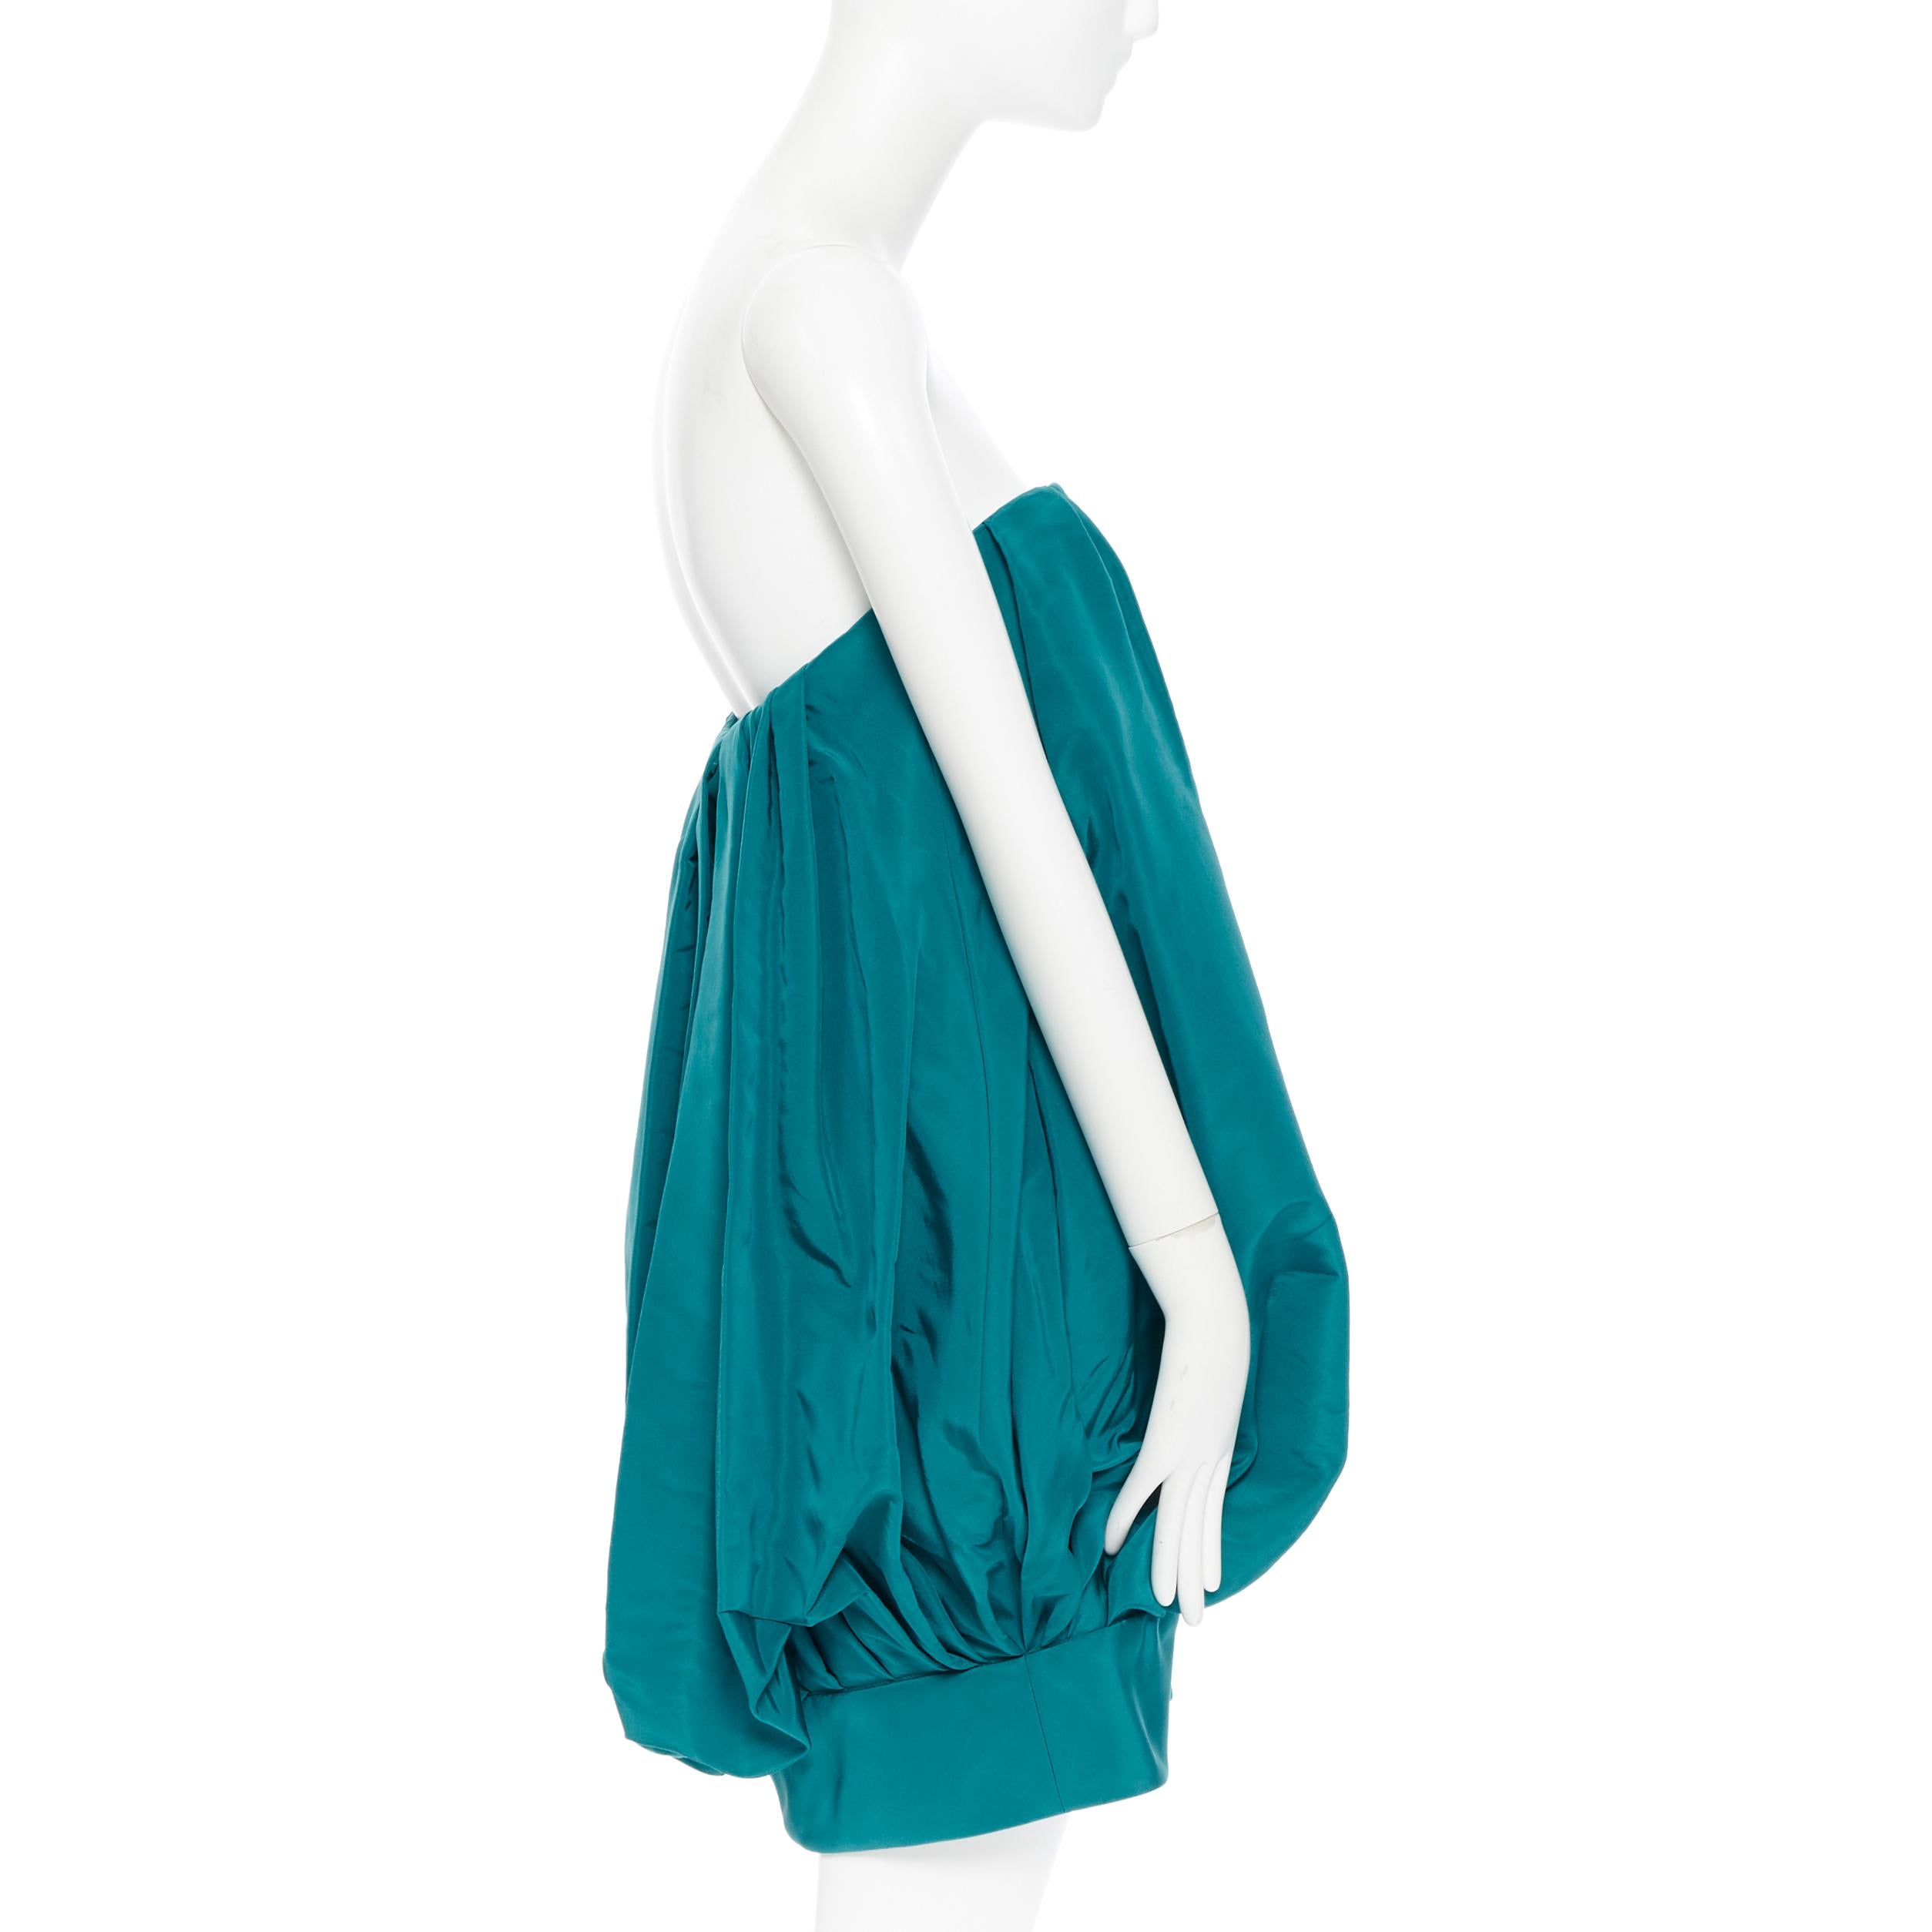 OSCAR DE LA RENTA AW13 100% silk green corset voluminous bubble dress US4 S 
Reference: LNKO/A01203 
Brand: Oscar De La Renta 
Designer: Oscar De La Renta 
Collection: Fall Winter 2013 
Material: Silk 
Color: Green 
Pattern: Solid 
Closure: Zip